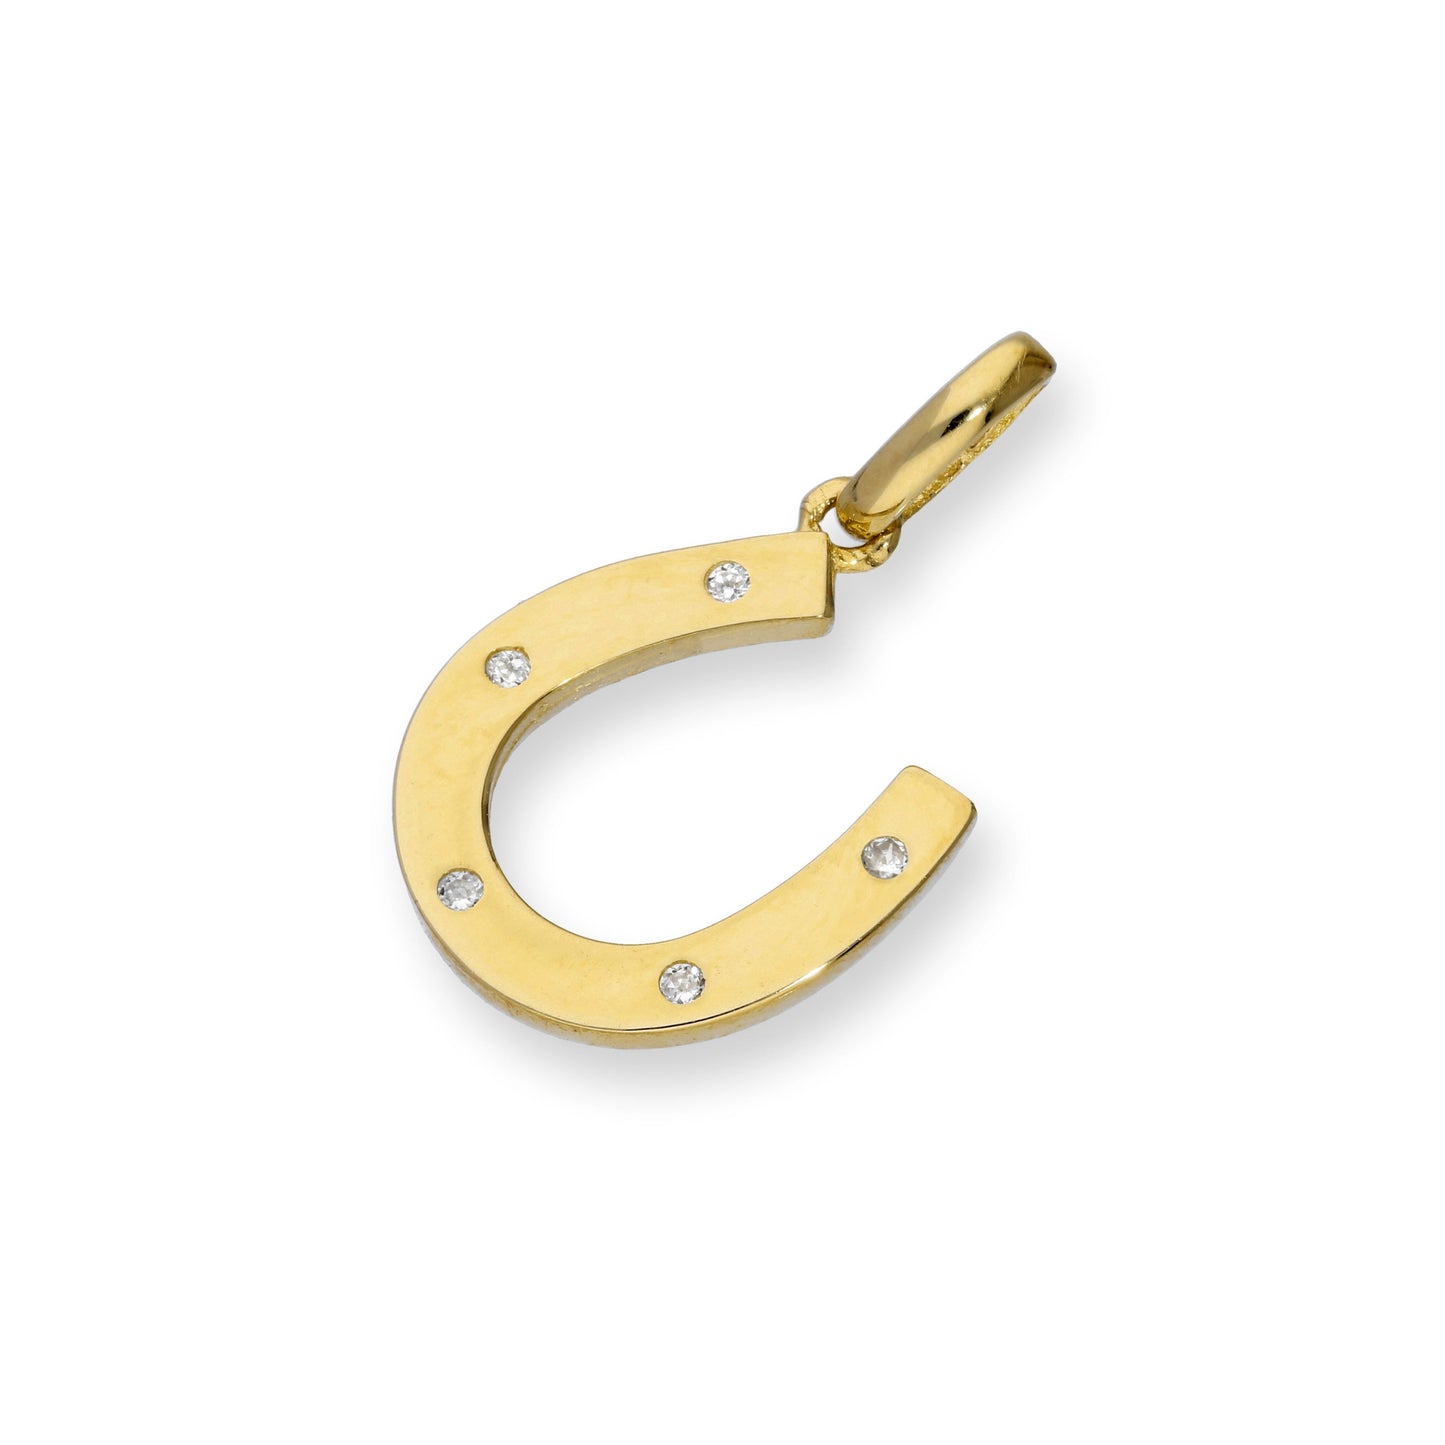 9ct Gold & Clear CZ Crystal Horseshoe Charm